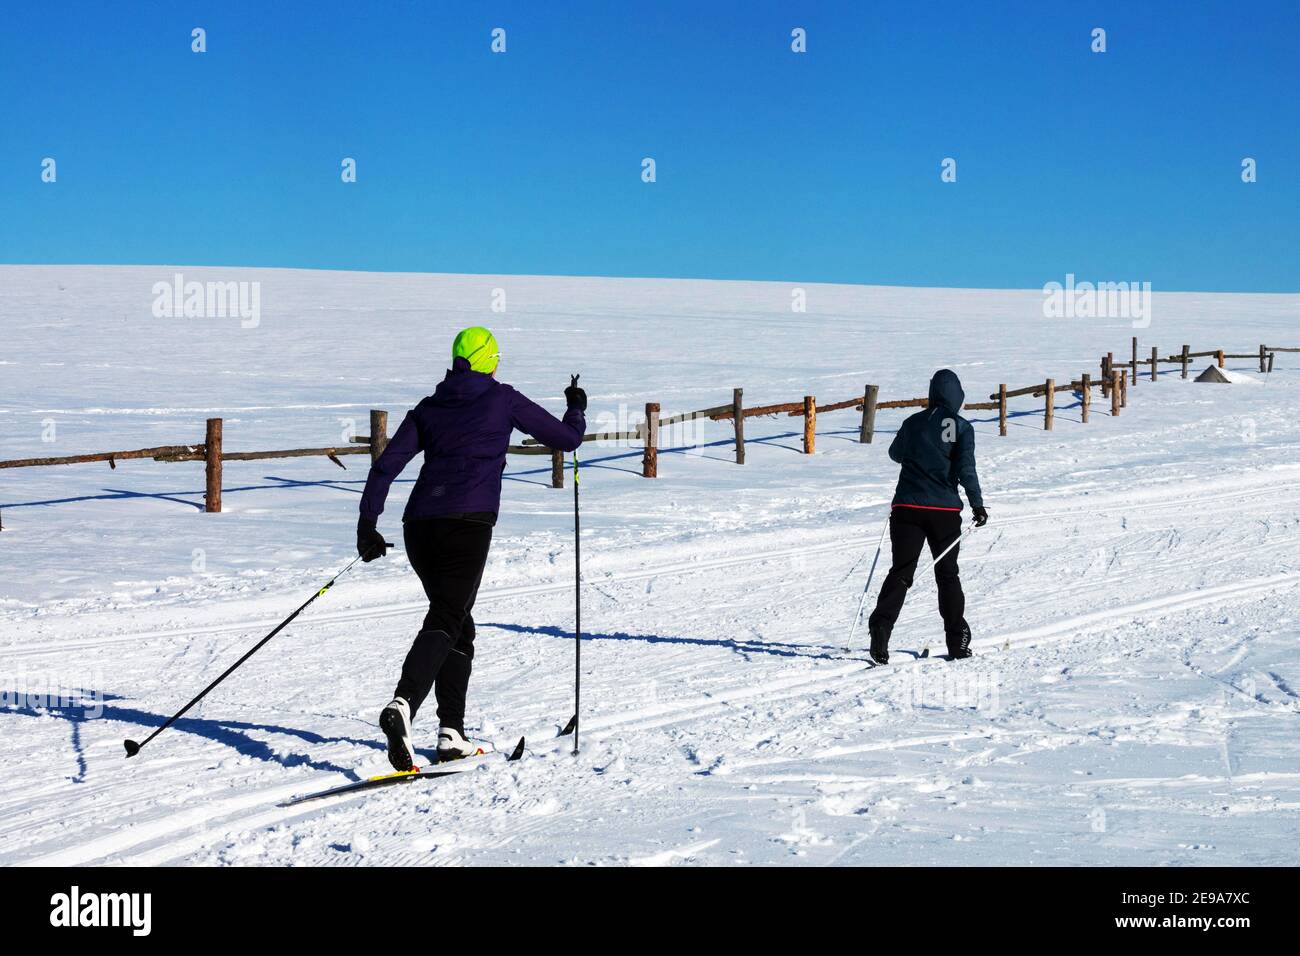 Zwei Frauen Langlaufen in schneebedeckten Ebene Winterszene Stockfoto